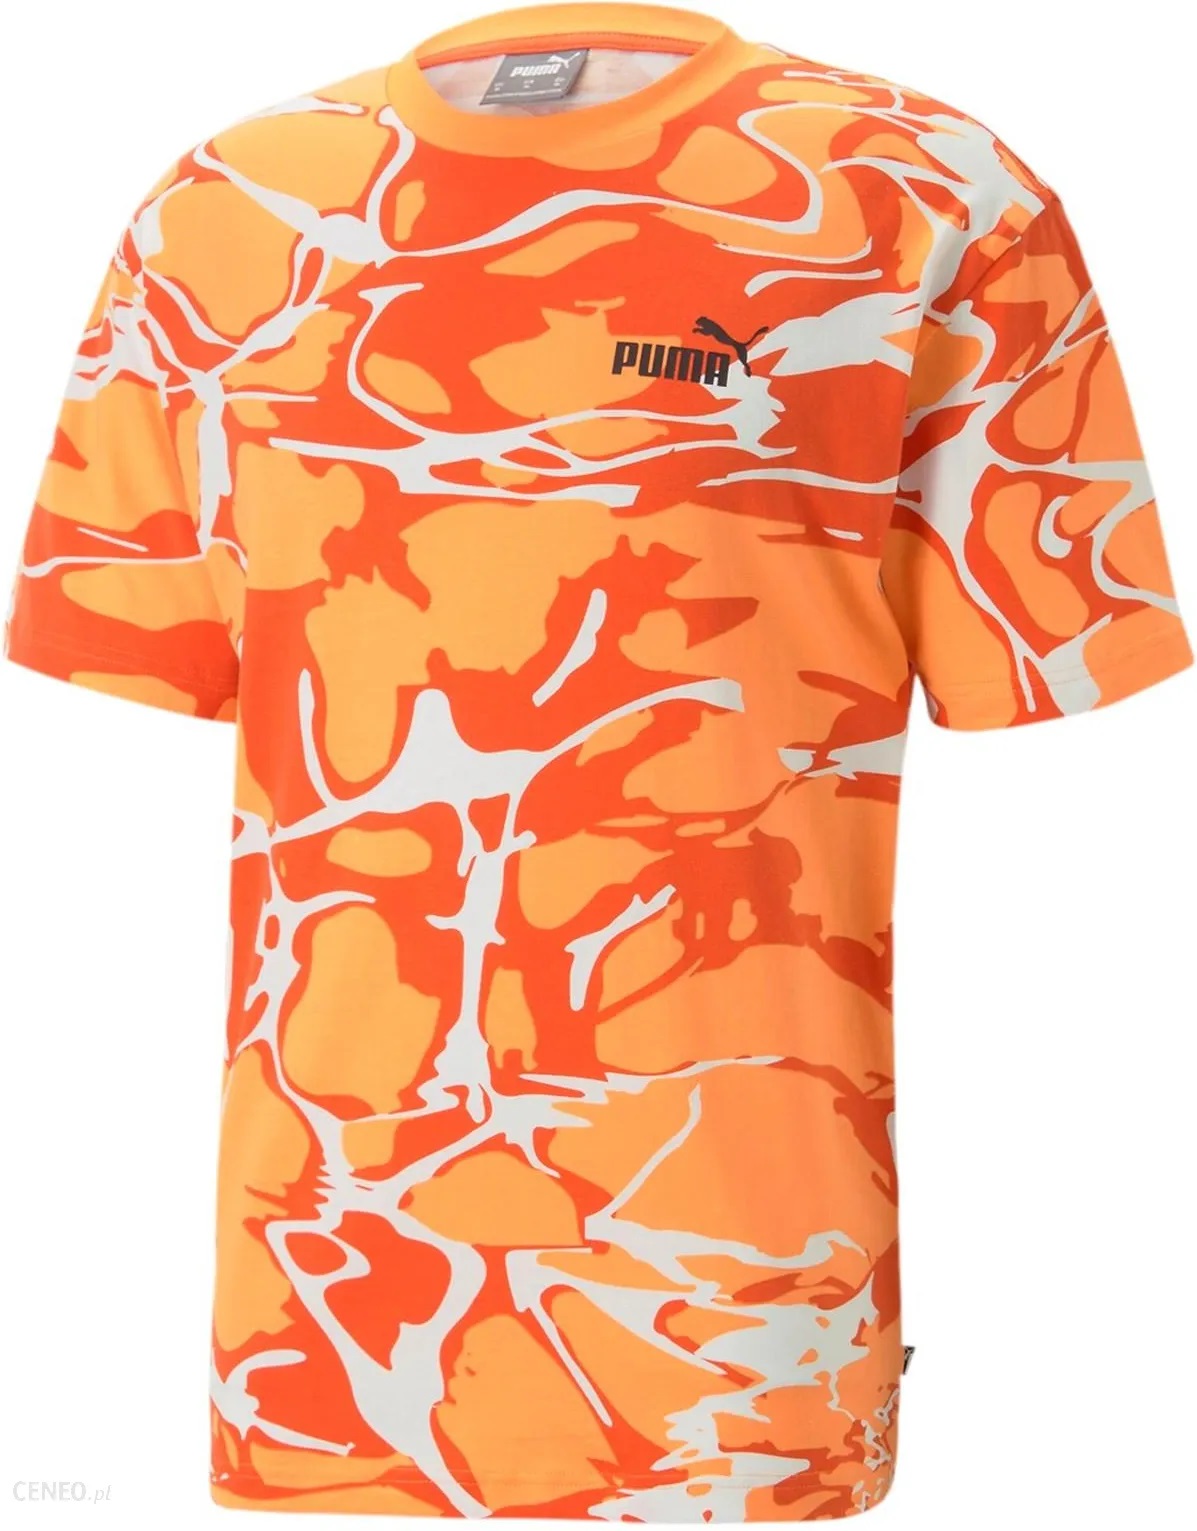 Puma Men's Puma Clementine Summer Splash AOP T-Shirt